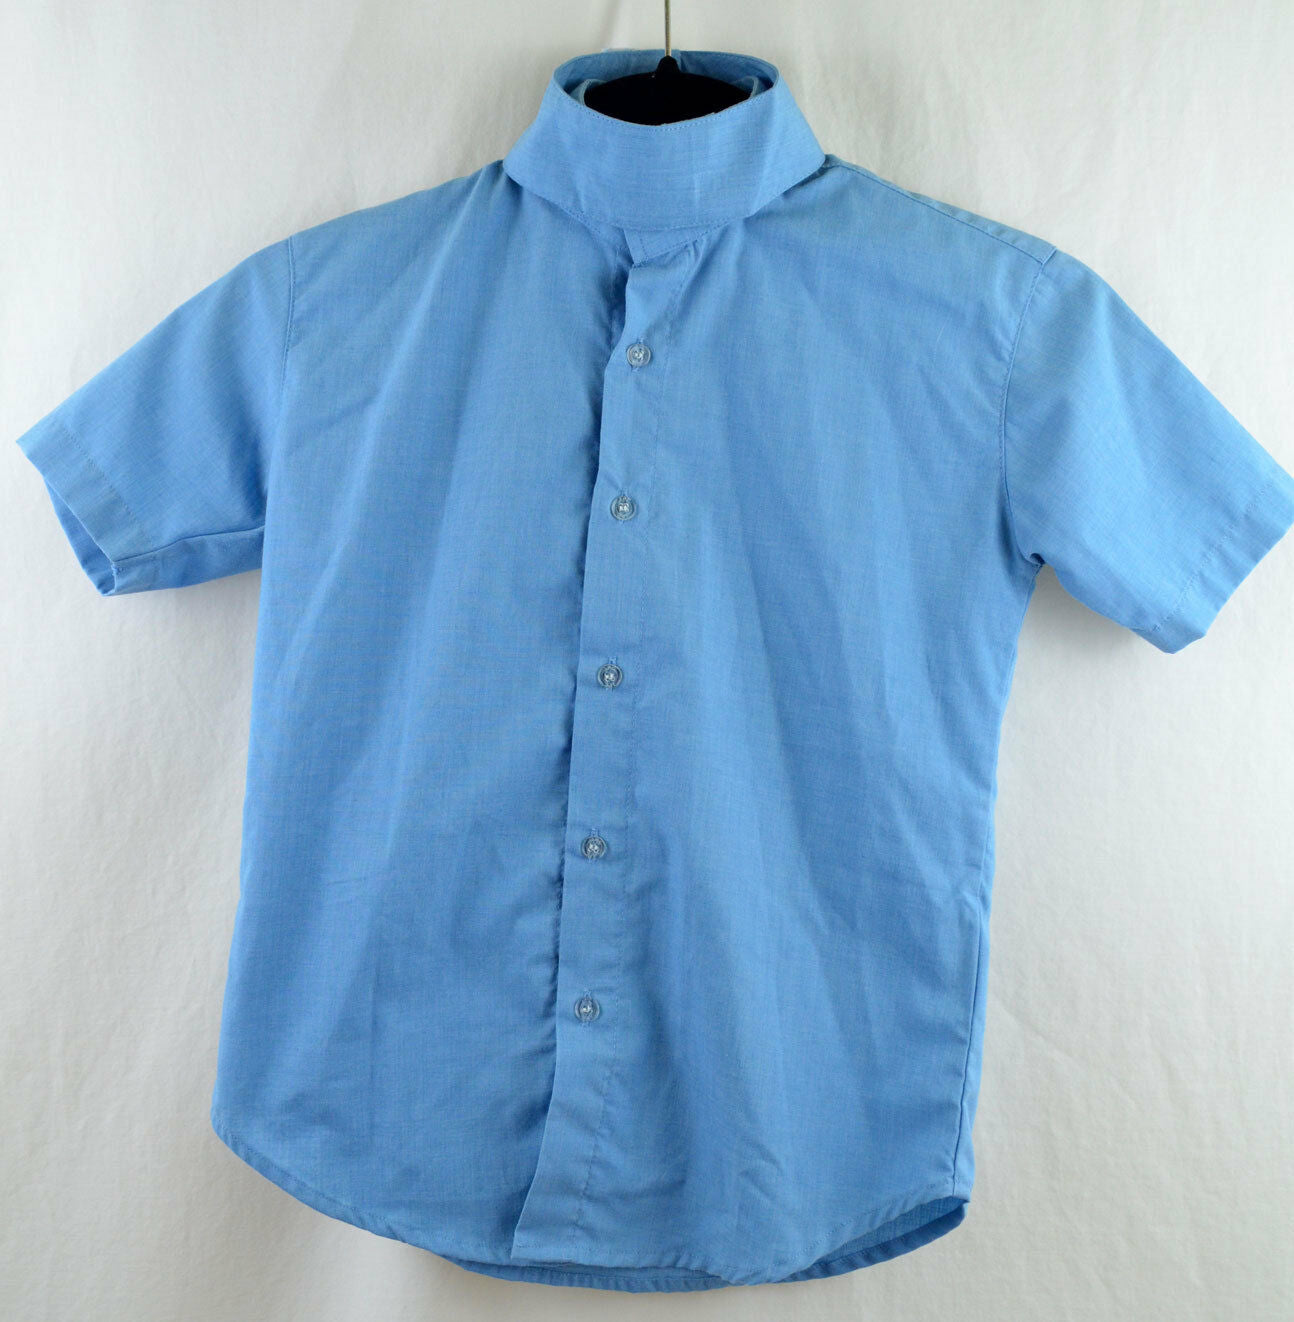 TUFF RIDER Show Shirt - Girls Size 06 - 2 Collars - Short Sleeve Blue